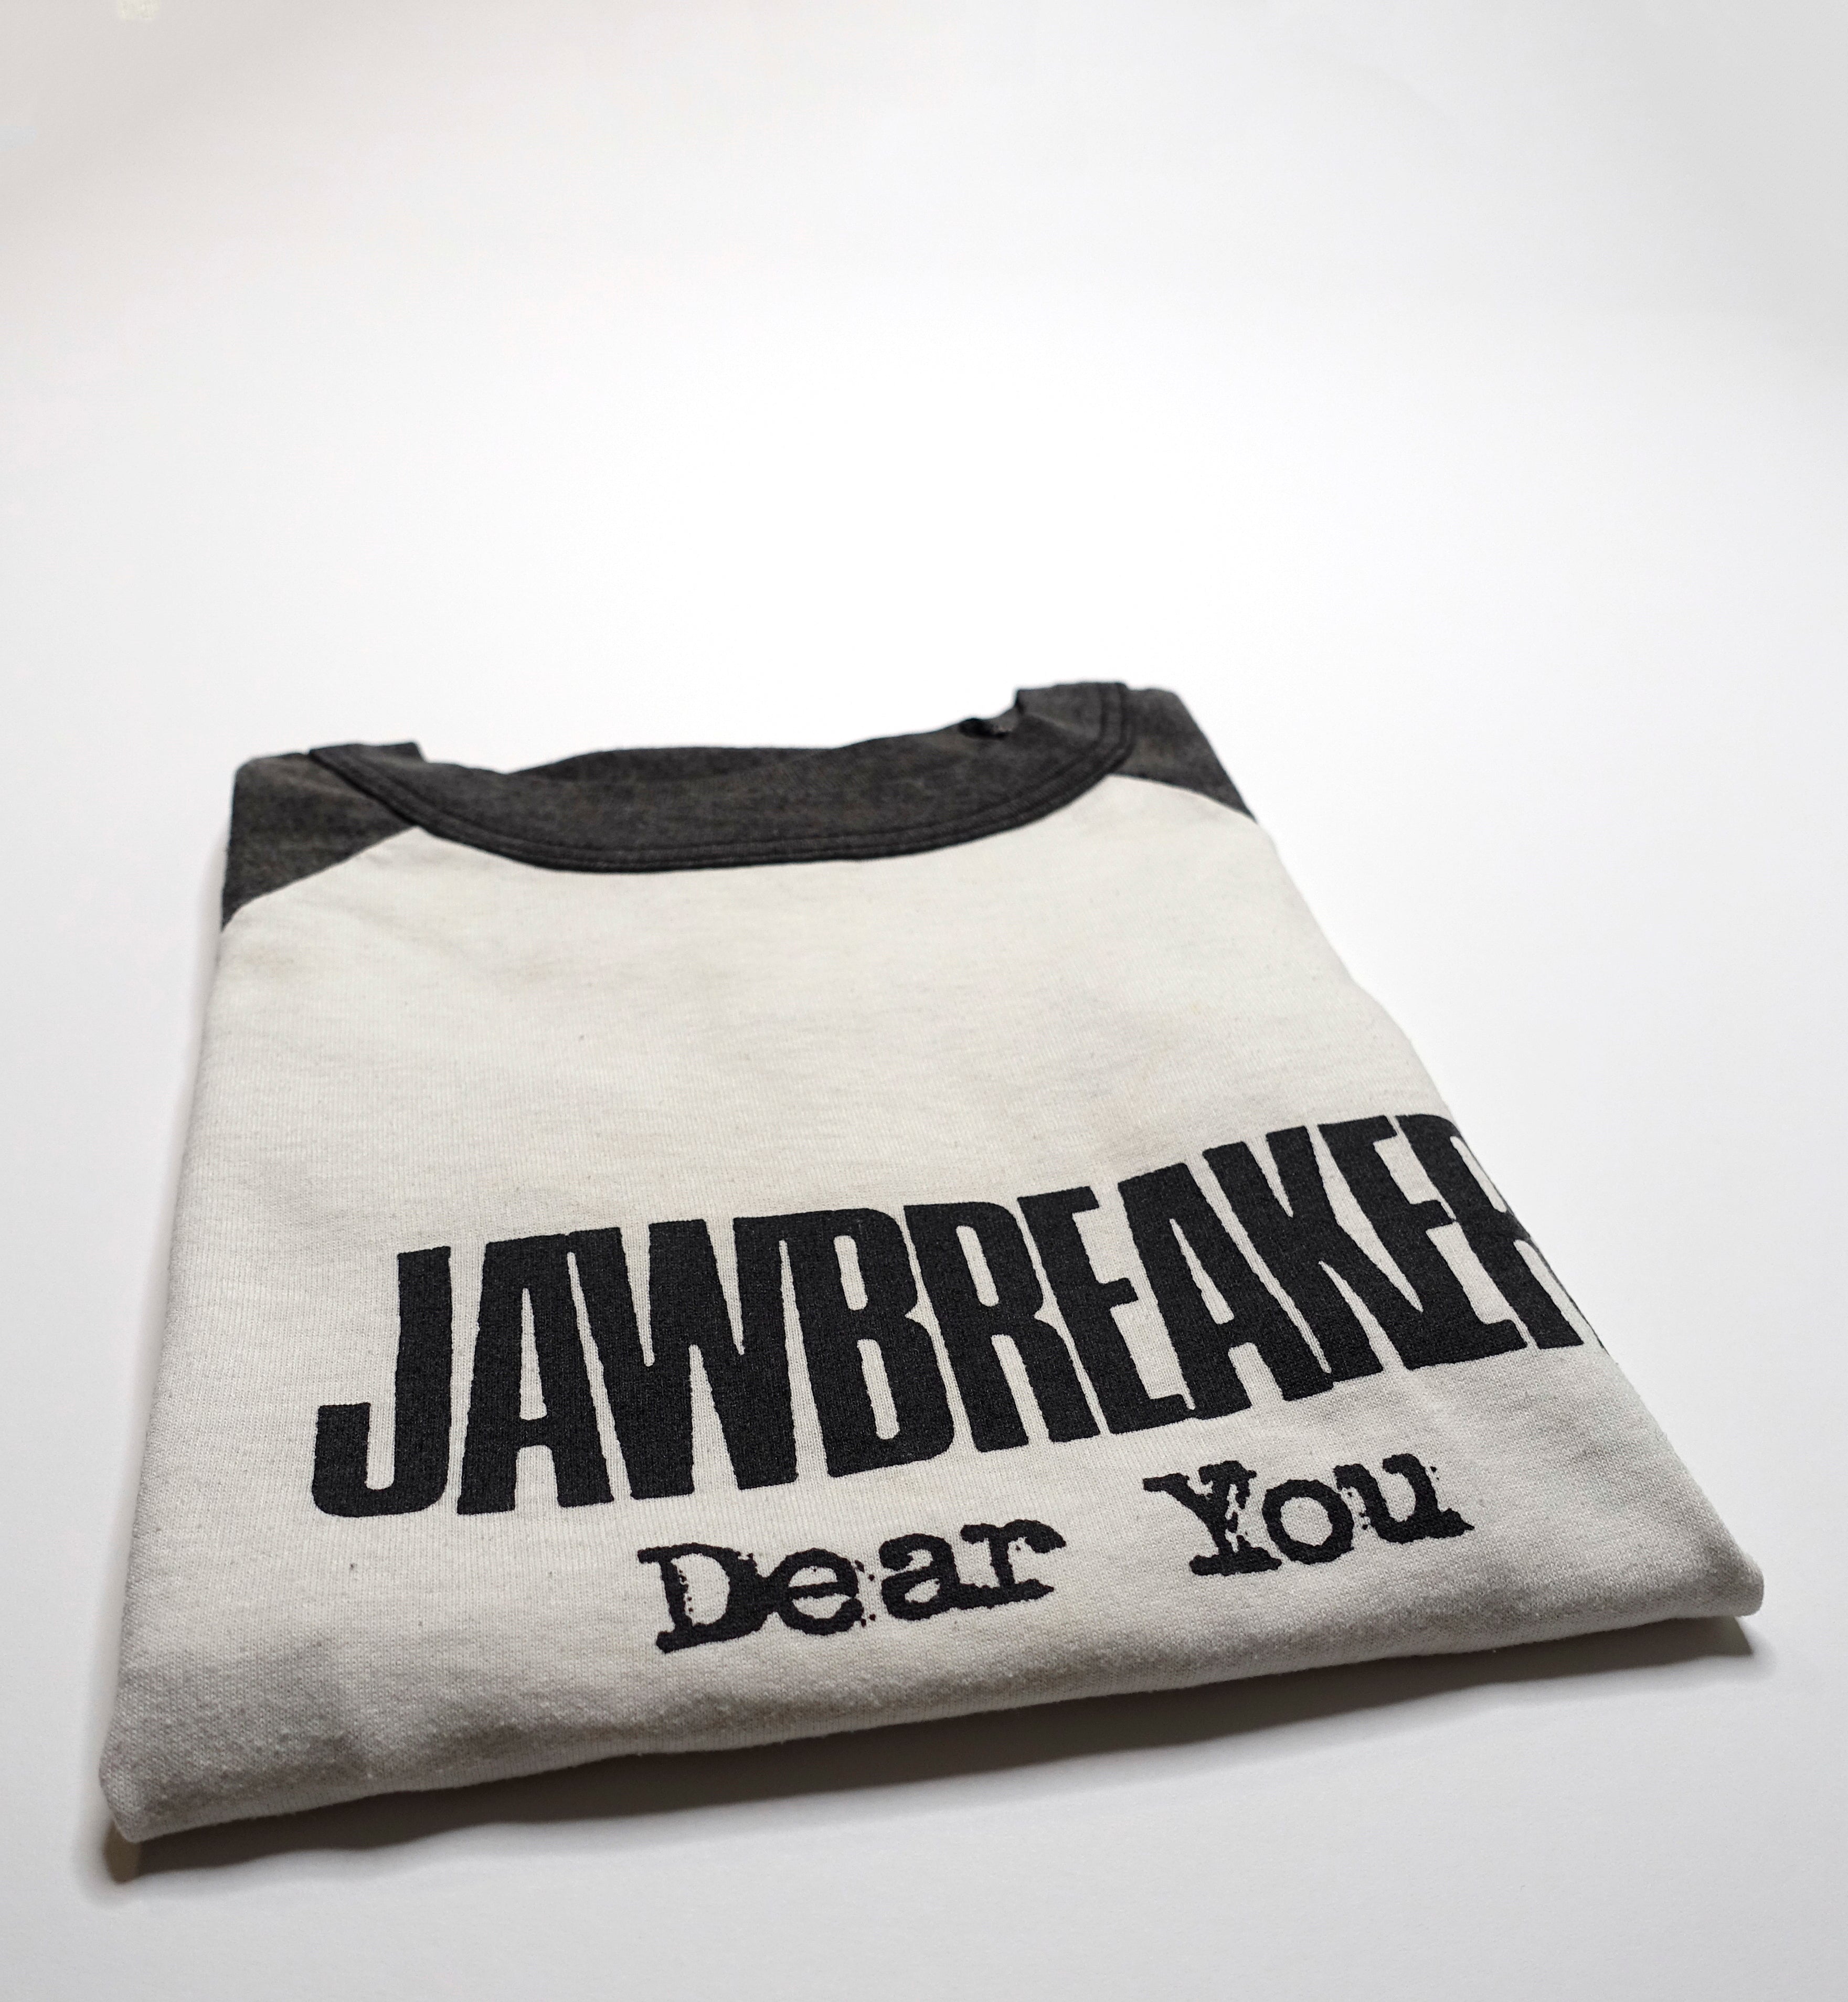 Jawbreaker - Dear You Raglan/Jersey 1995 Tour Shirt Size XL